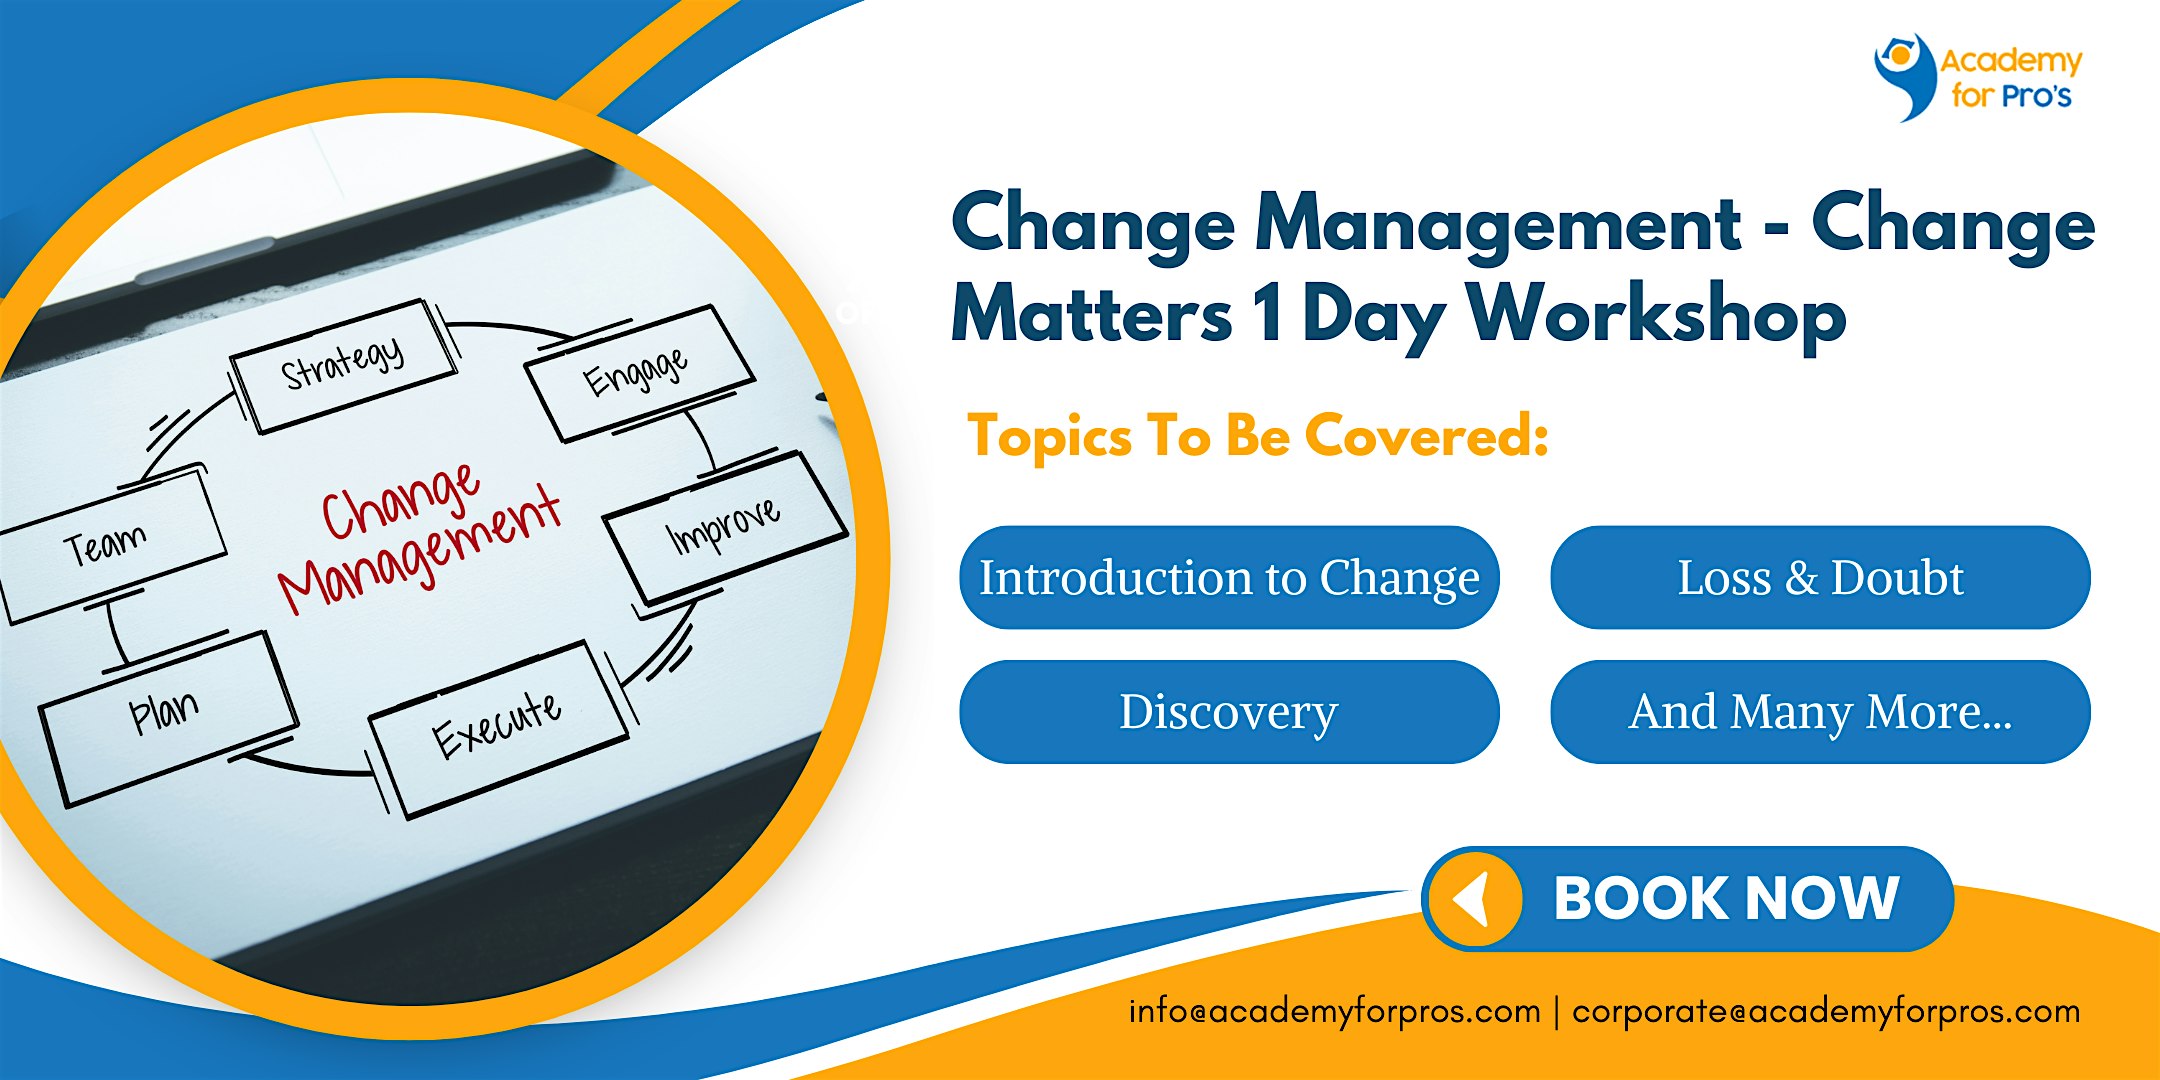 Change Management - Change Matters 1 Day Workshop in Tacoma, WA